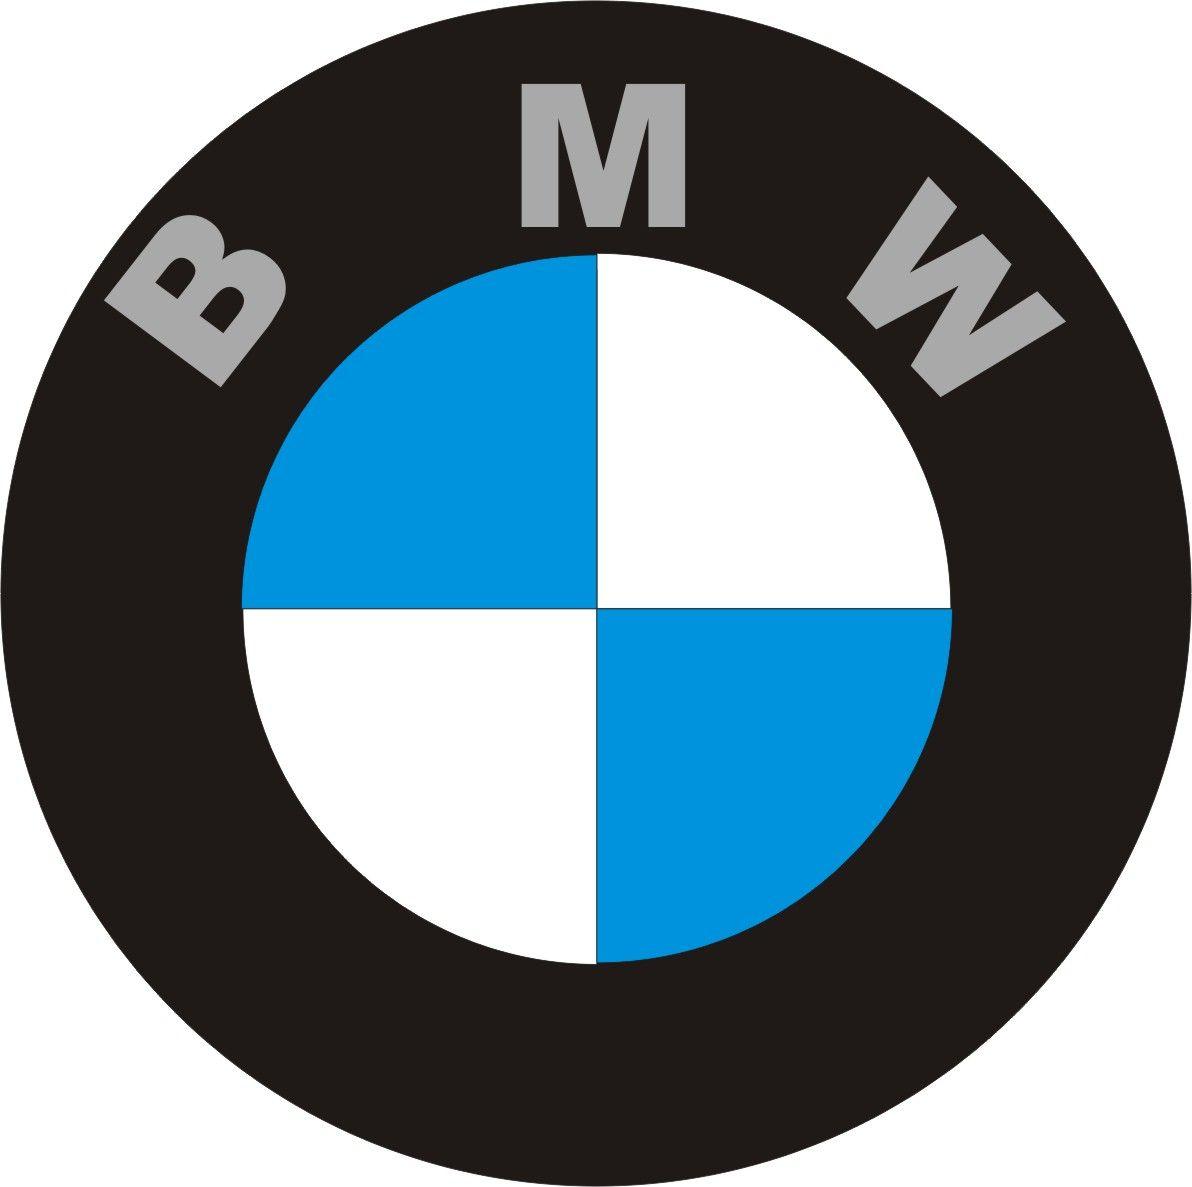 No Circle Logo - BMW Logo, BMW Car Symbol Meaning, Emblem of Car Brand. Car Brand